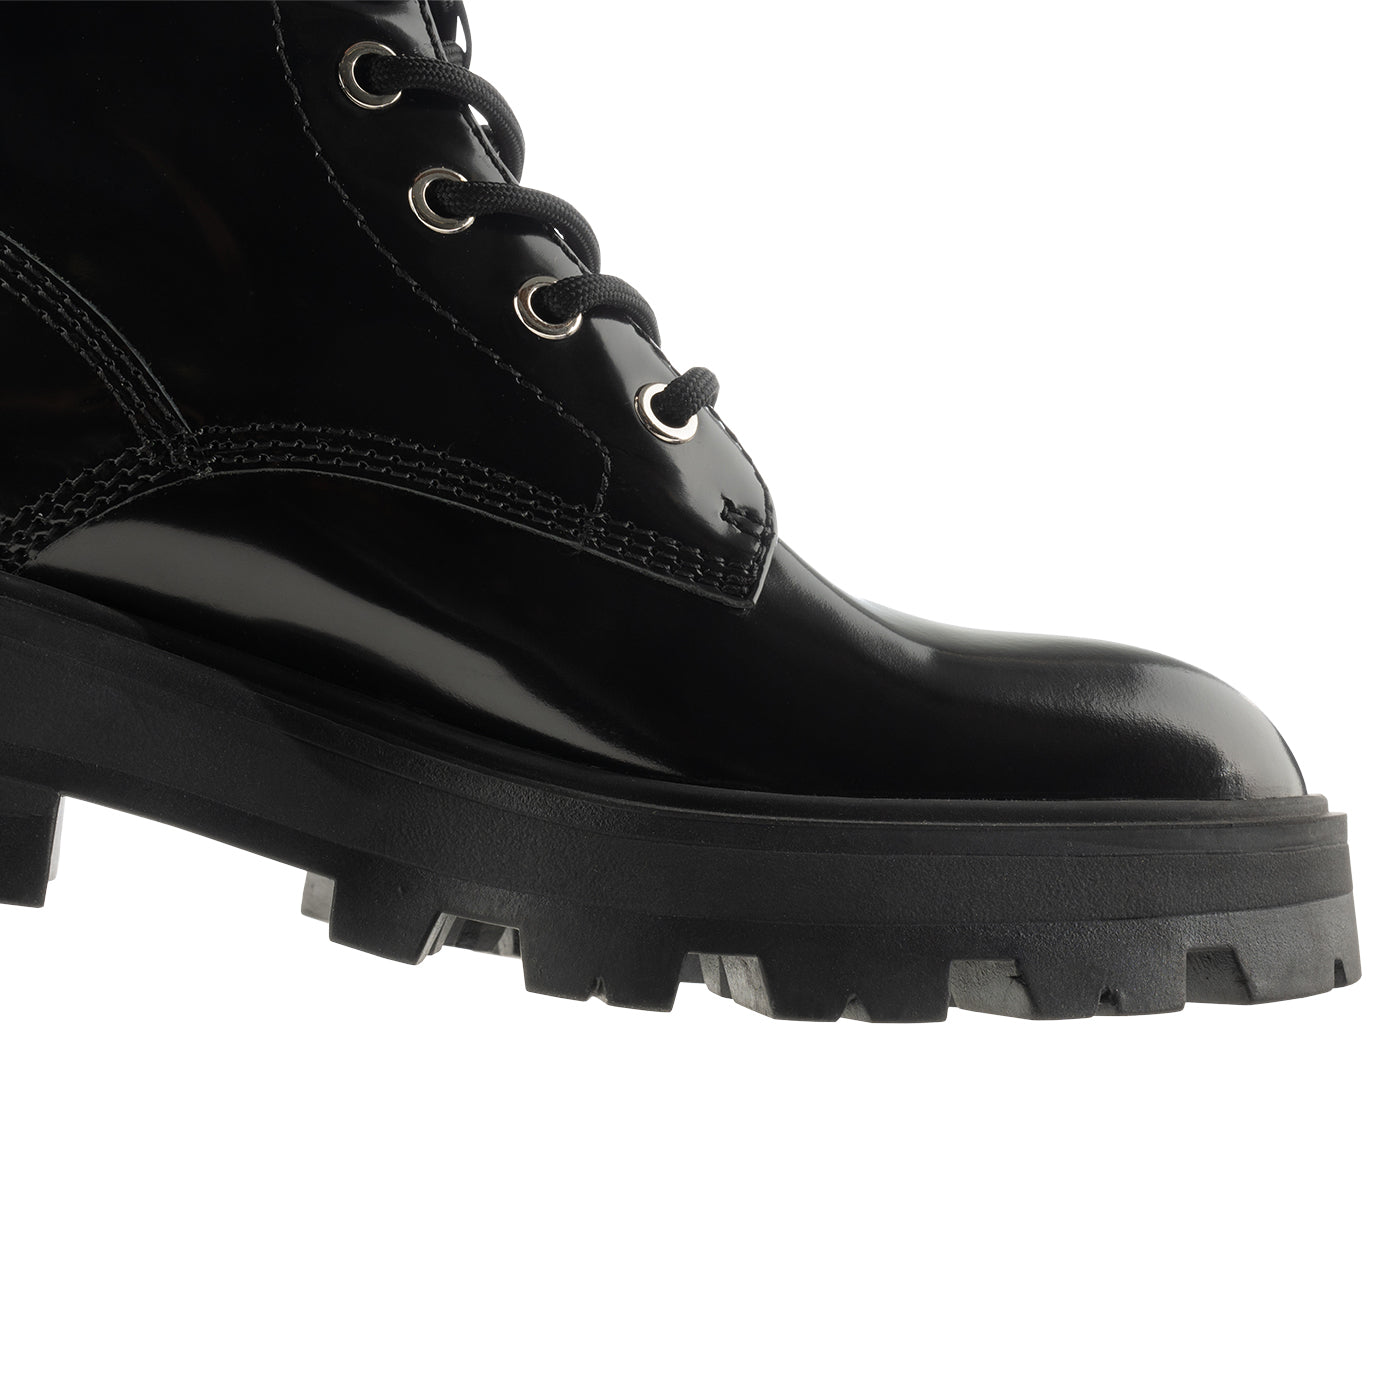 SHOE THE BEAR WOMENS Viv boot leather Boots 815 BLACK HIGH SHINE